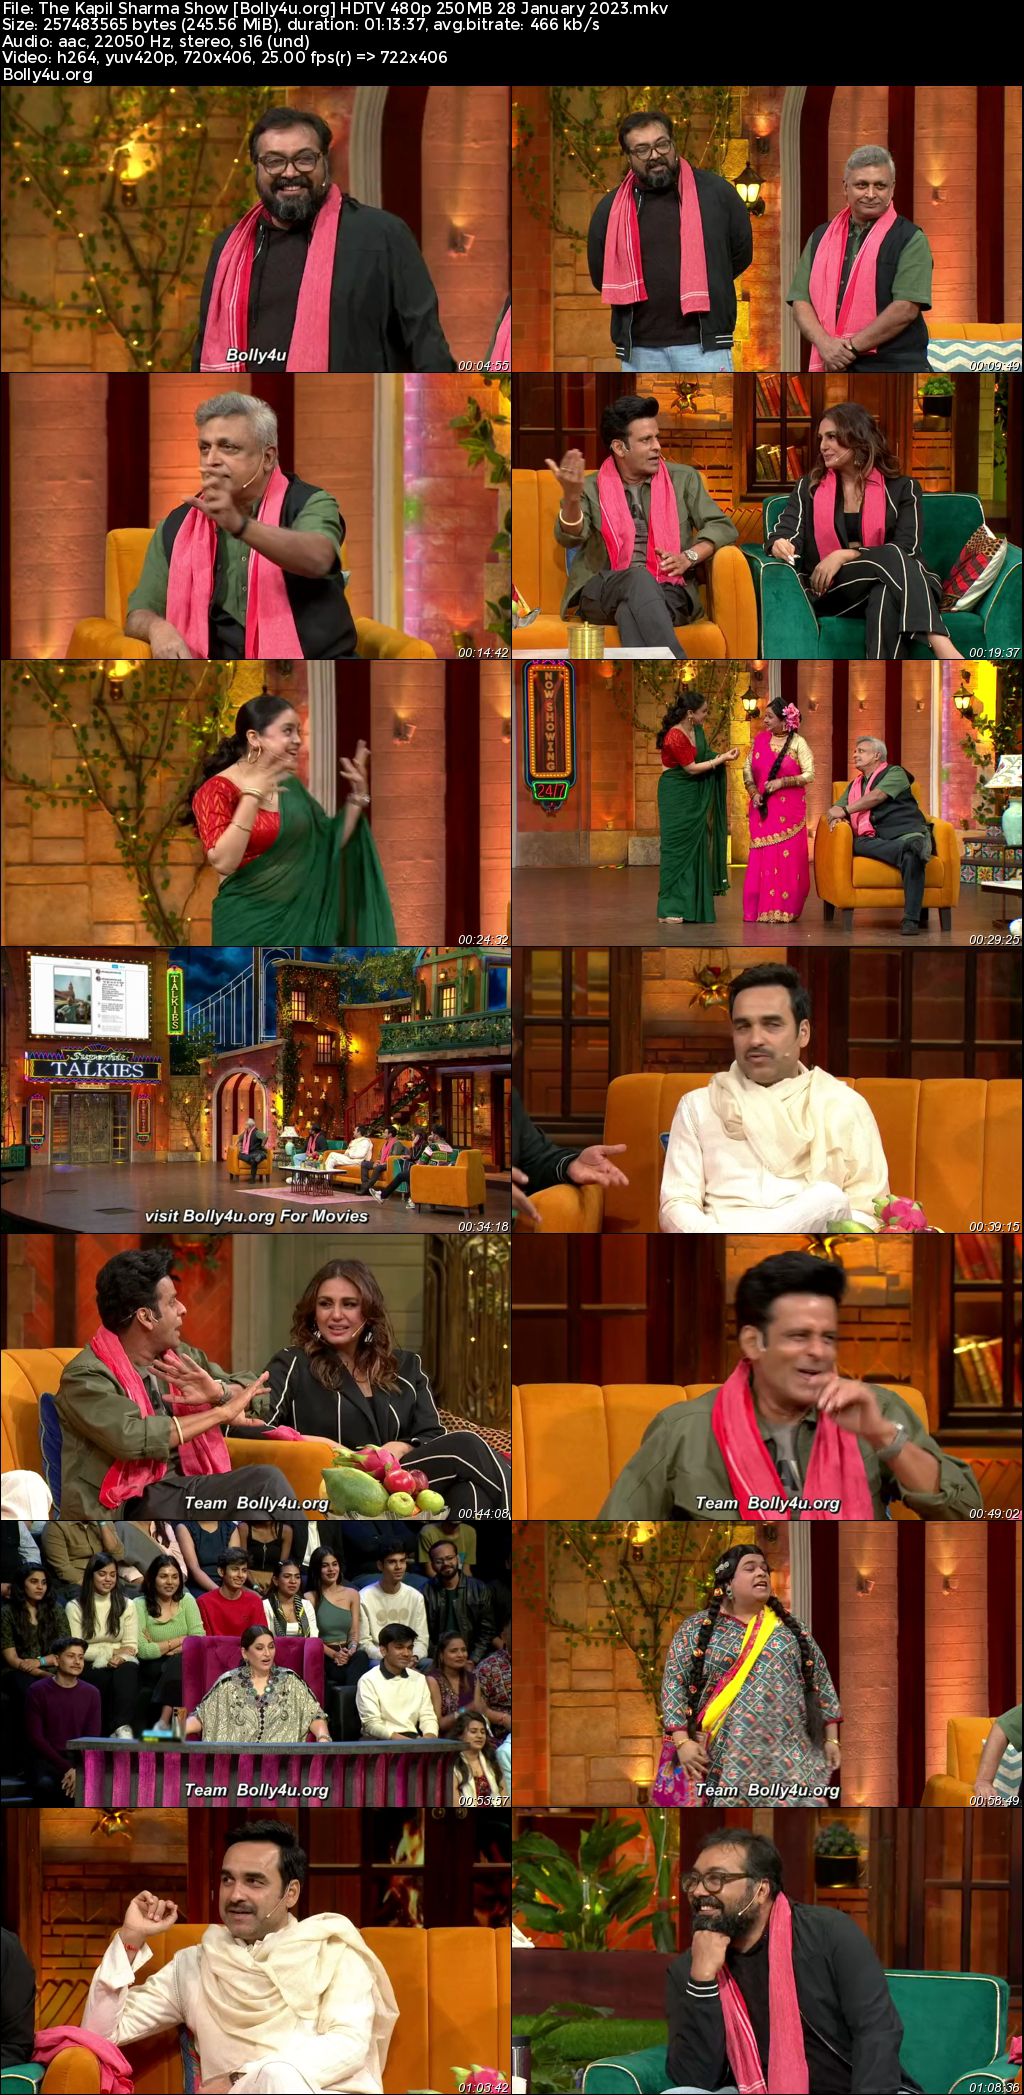 The Kapil Sharma Show HDTV 480p 250MB 28 January 2023 Download